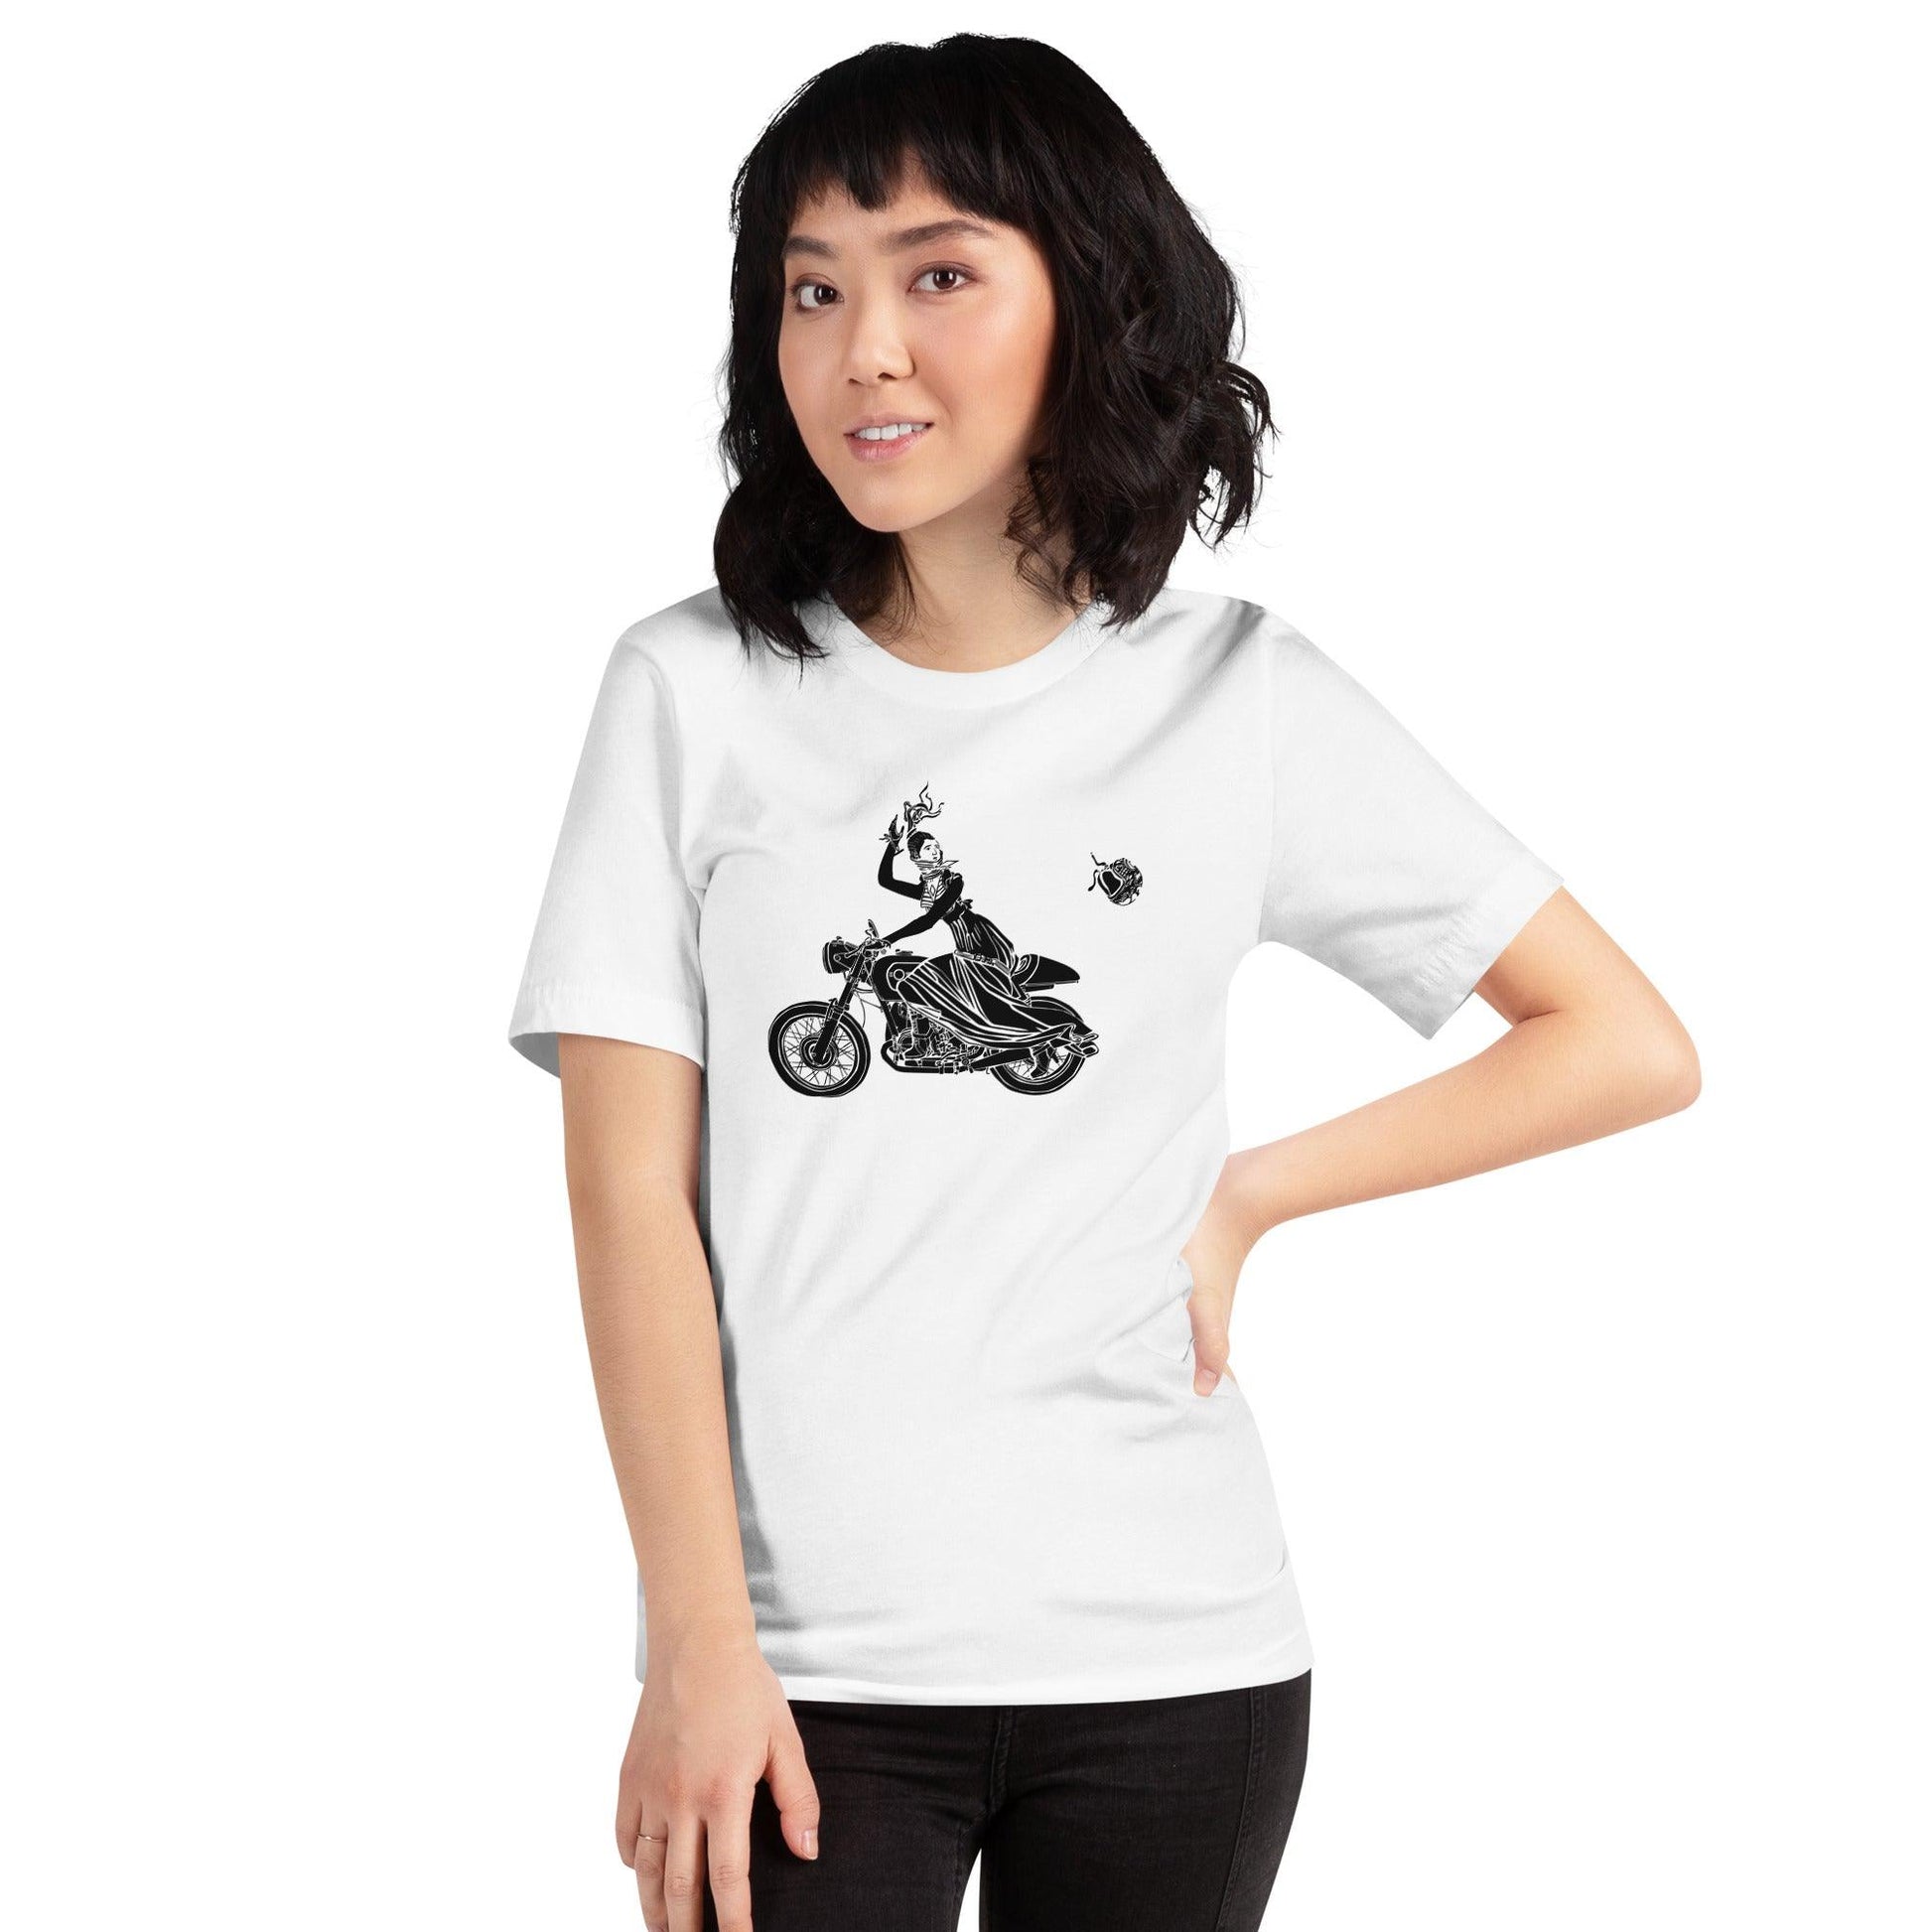 BellavanceInk: Victorian Lady Riding A Cafe Racer Motorcycle On Short Sleeve T-Shirt - BellavanceInk